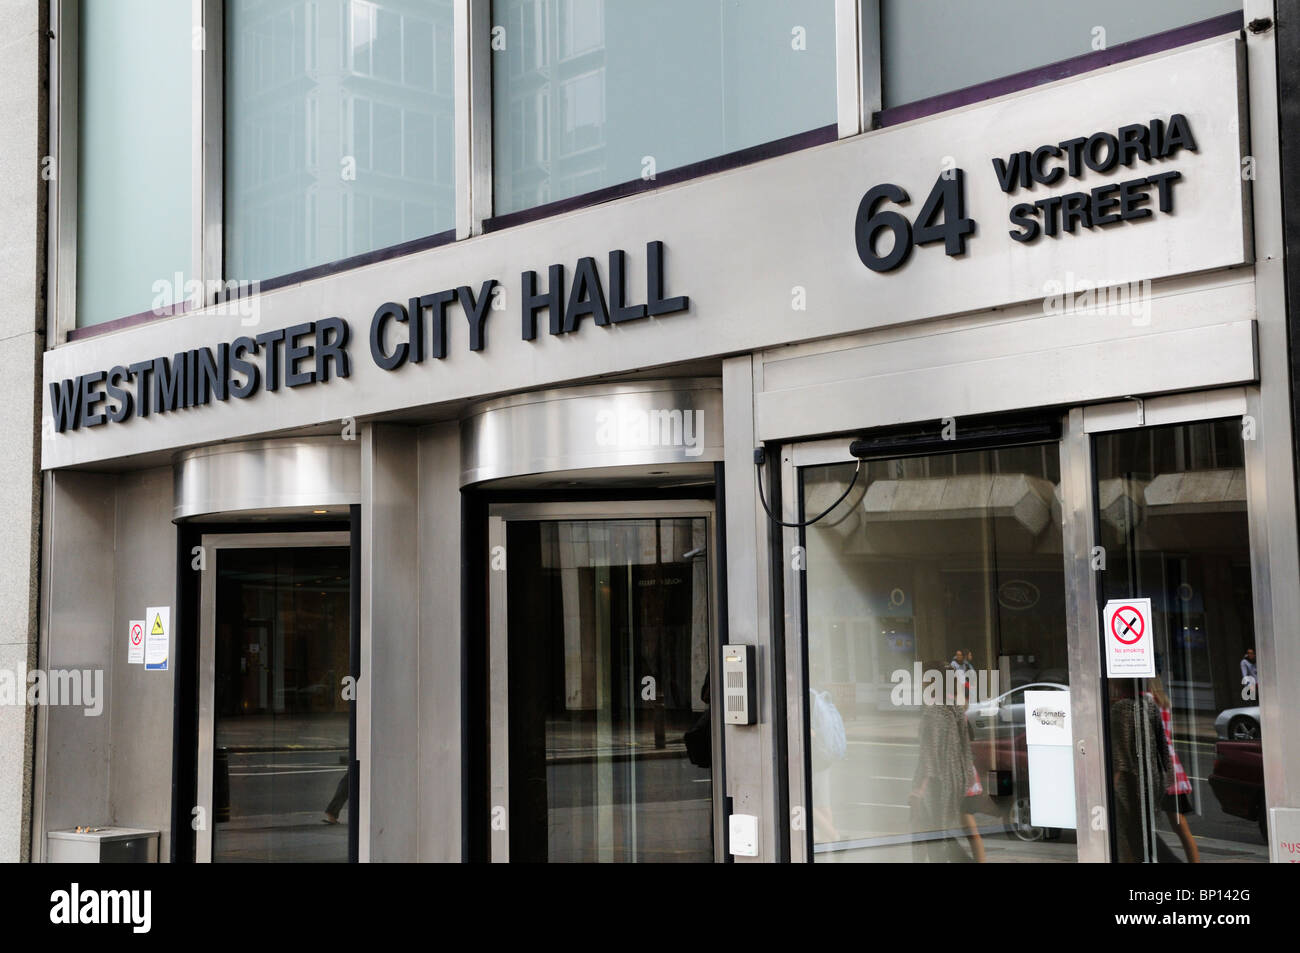 Westminster City Hall 64 Victoria Street, Westminster, London, England, Vereinigtes Königreich Stockfoto